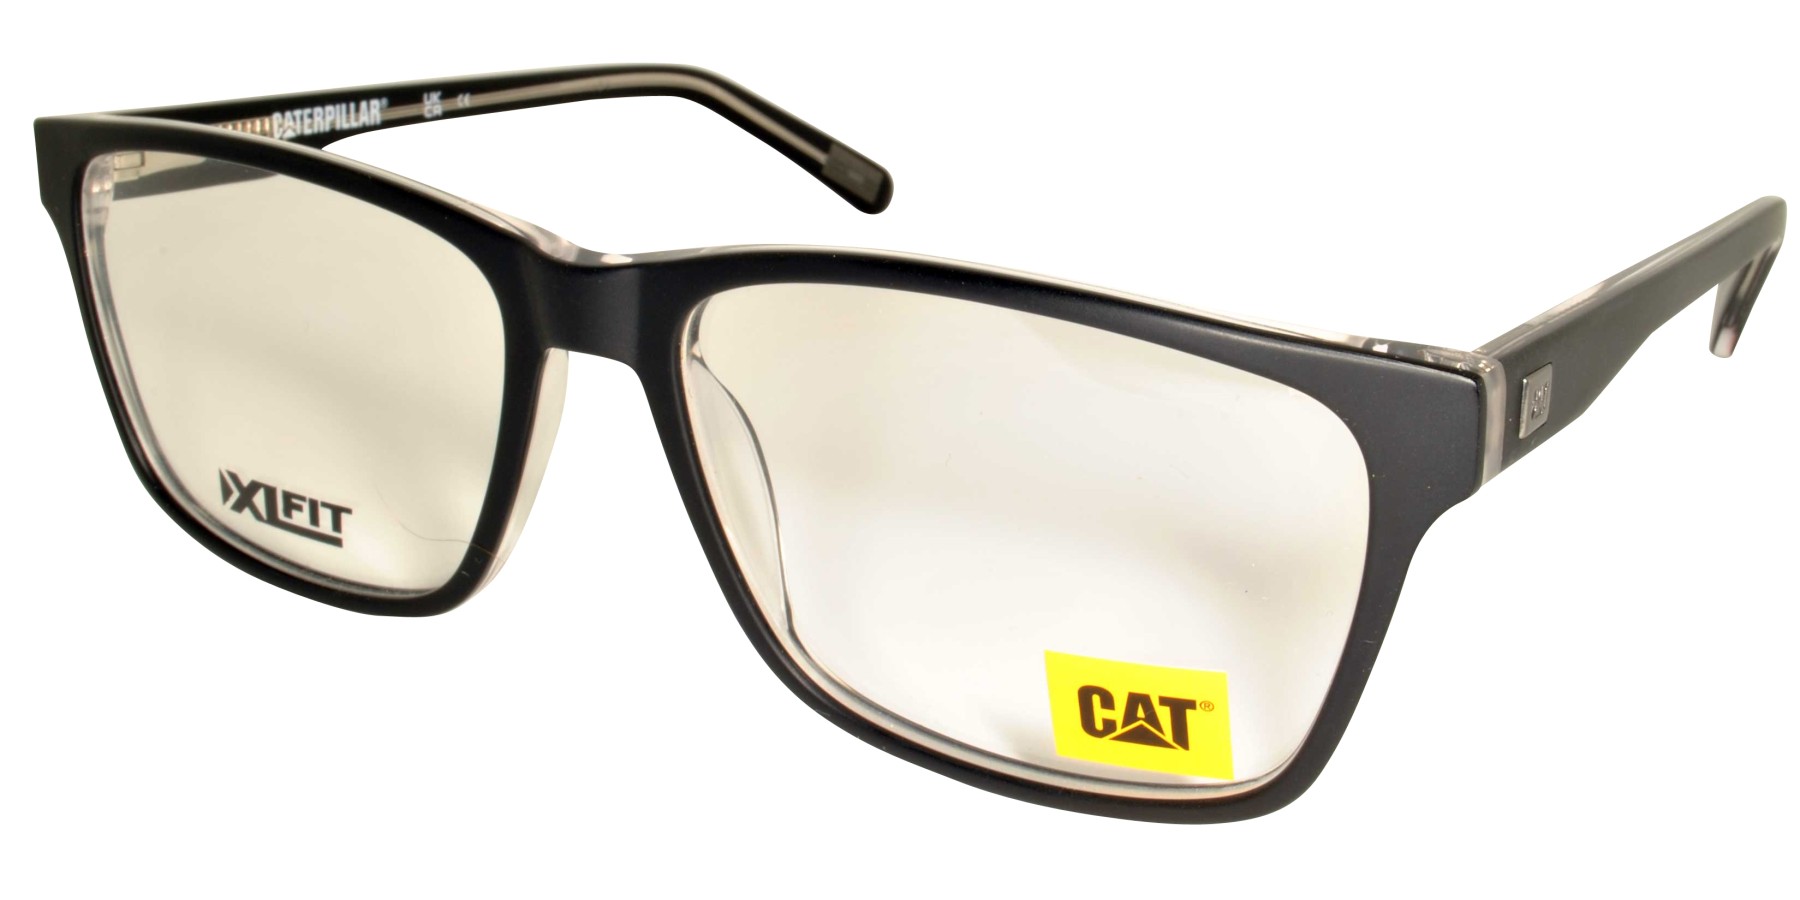 CAT CTO Foreman Prescription Glasses